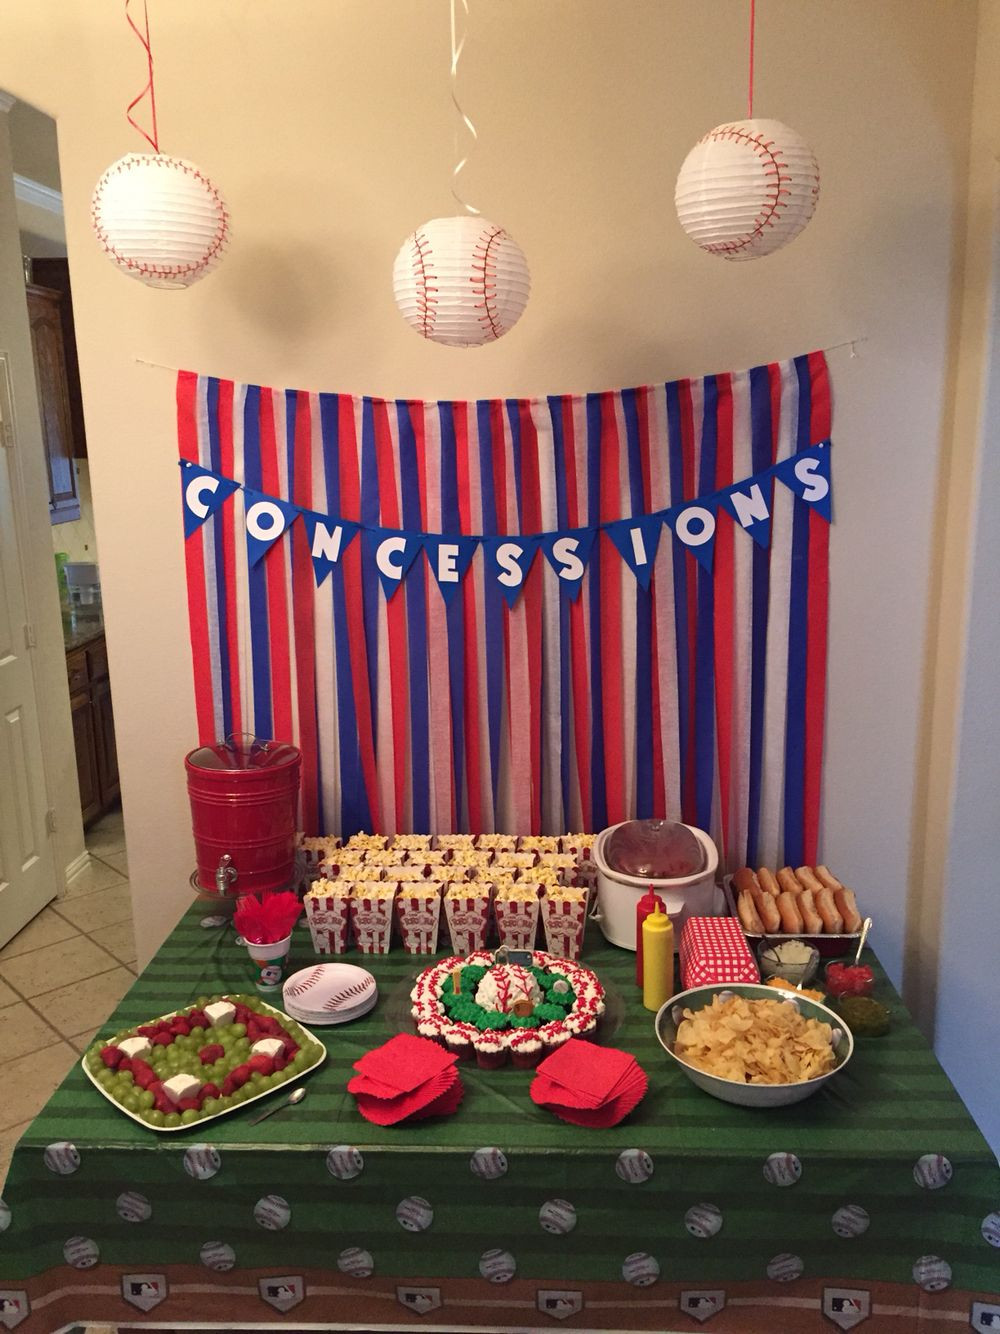 Best ideas about Baseball Birthday Party Ideas
. Save or Pin Baseball themed Birthday party Now.